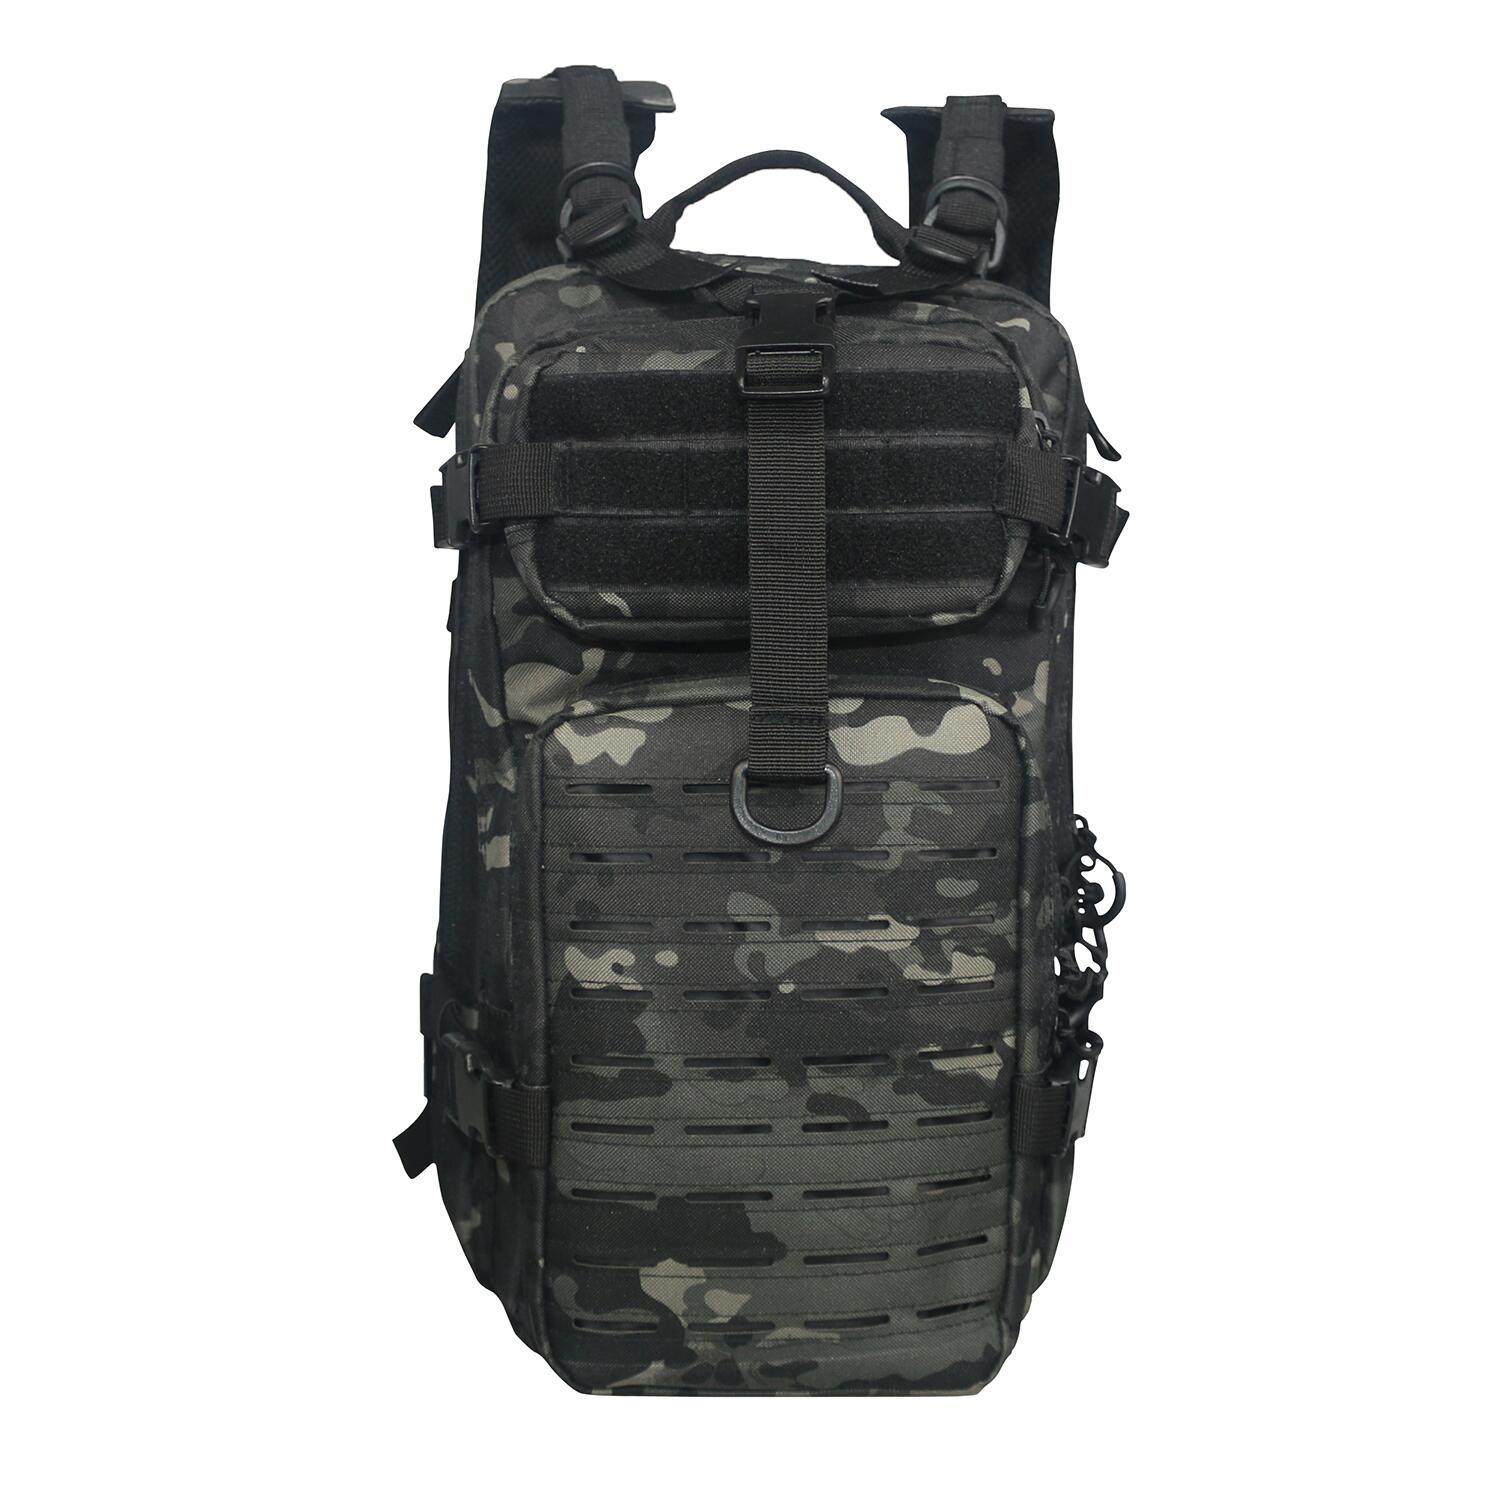 Pistol Weapon Army Range Backpack Waterproof Large Capacity Camping Traveling Bags